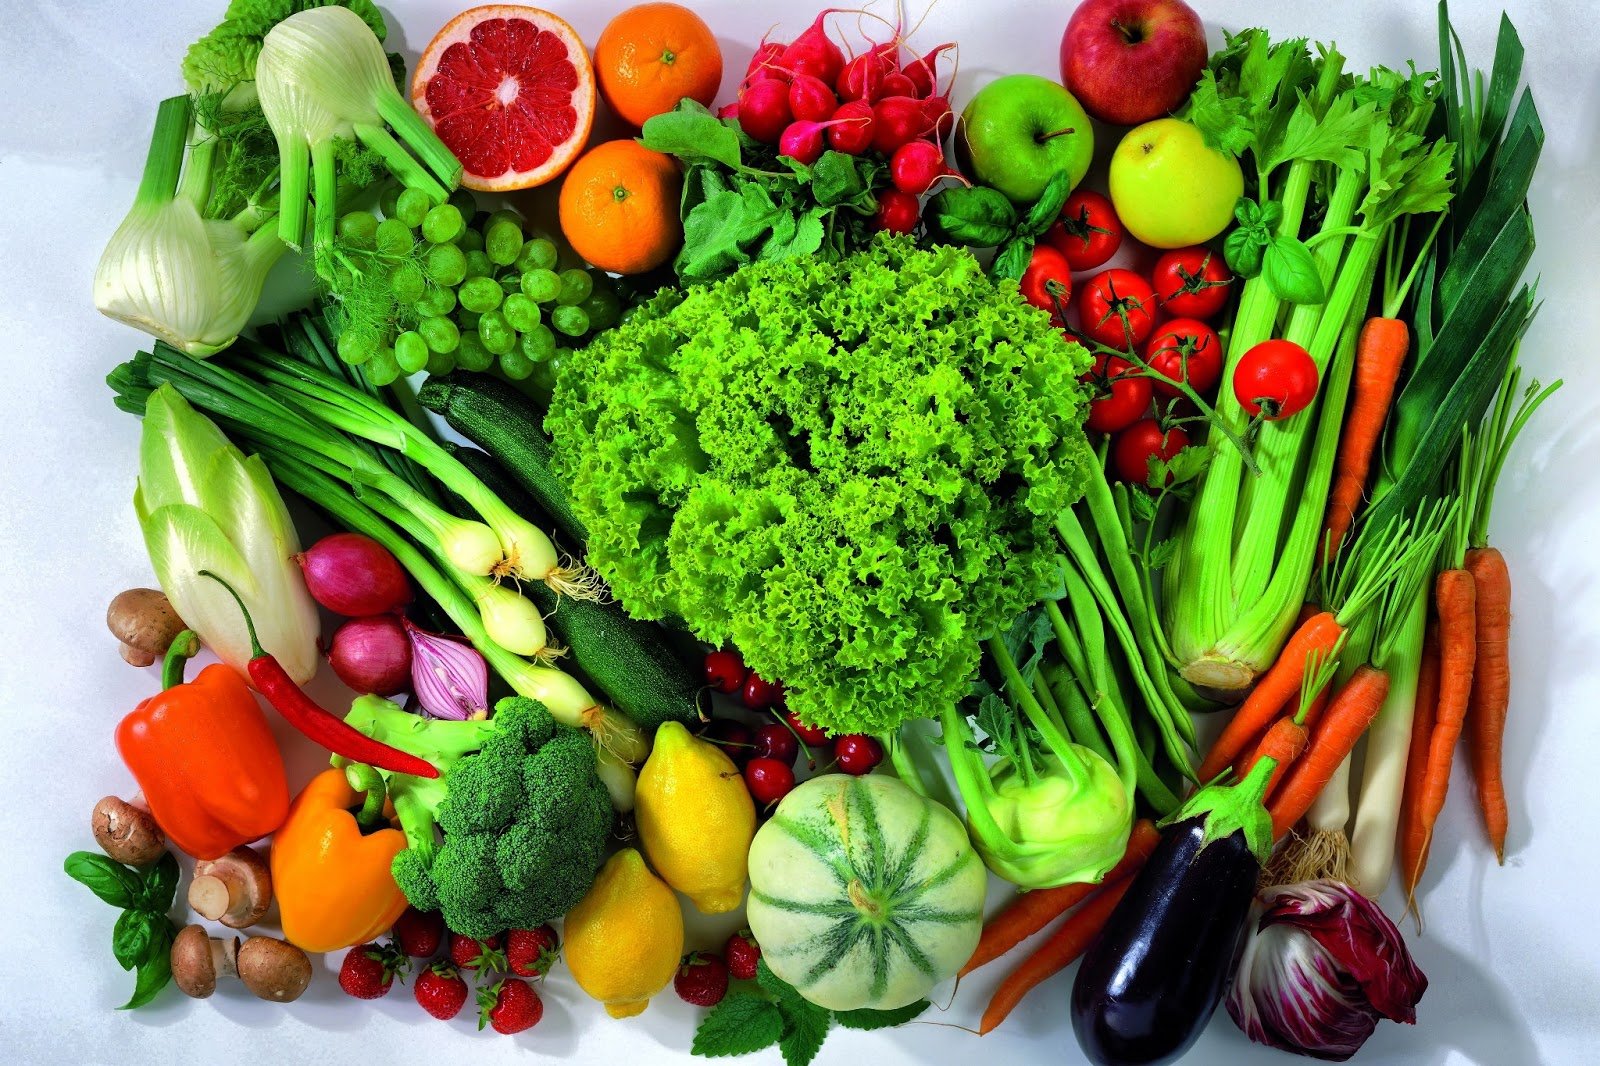 saúde verduras legumes frutas higiene